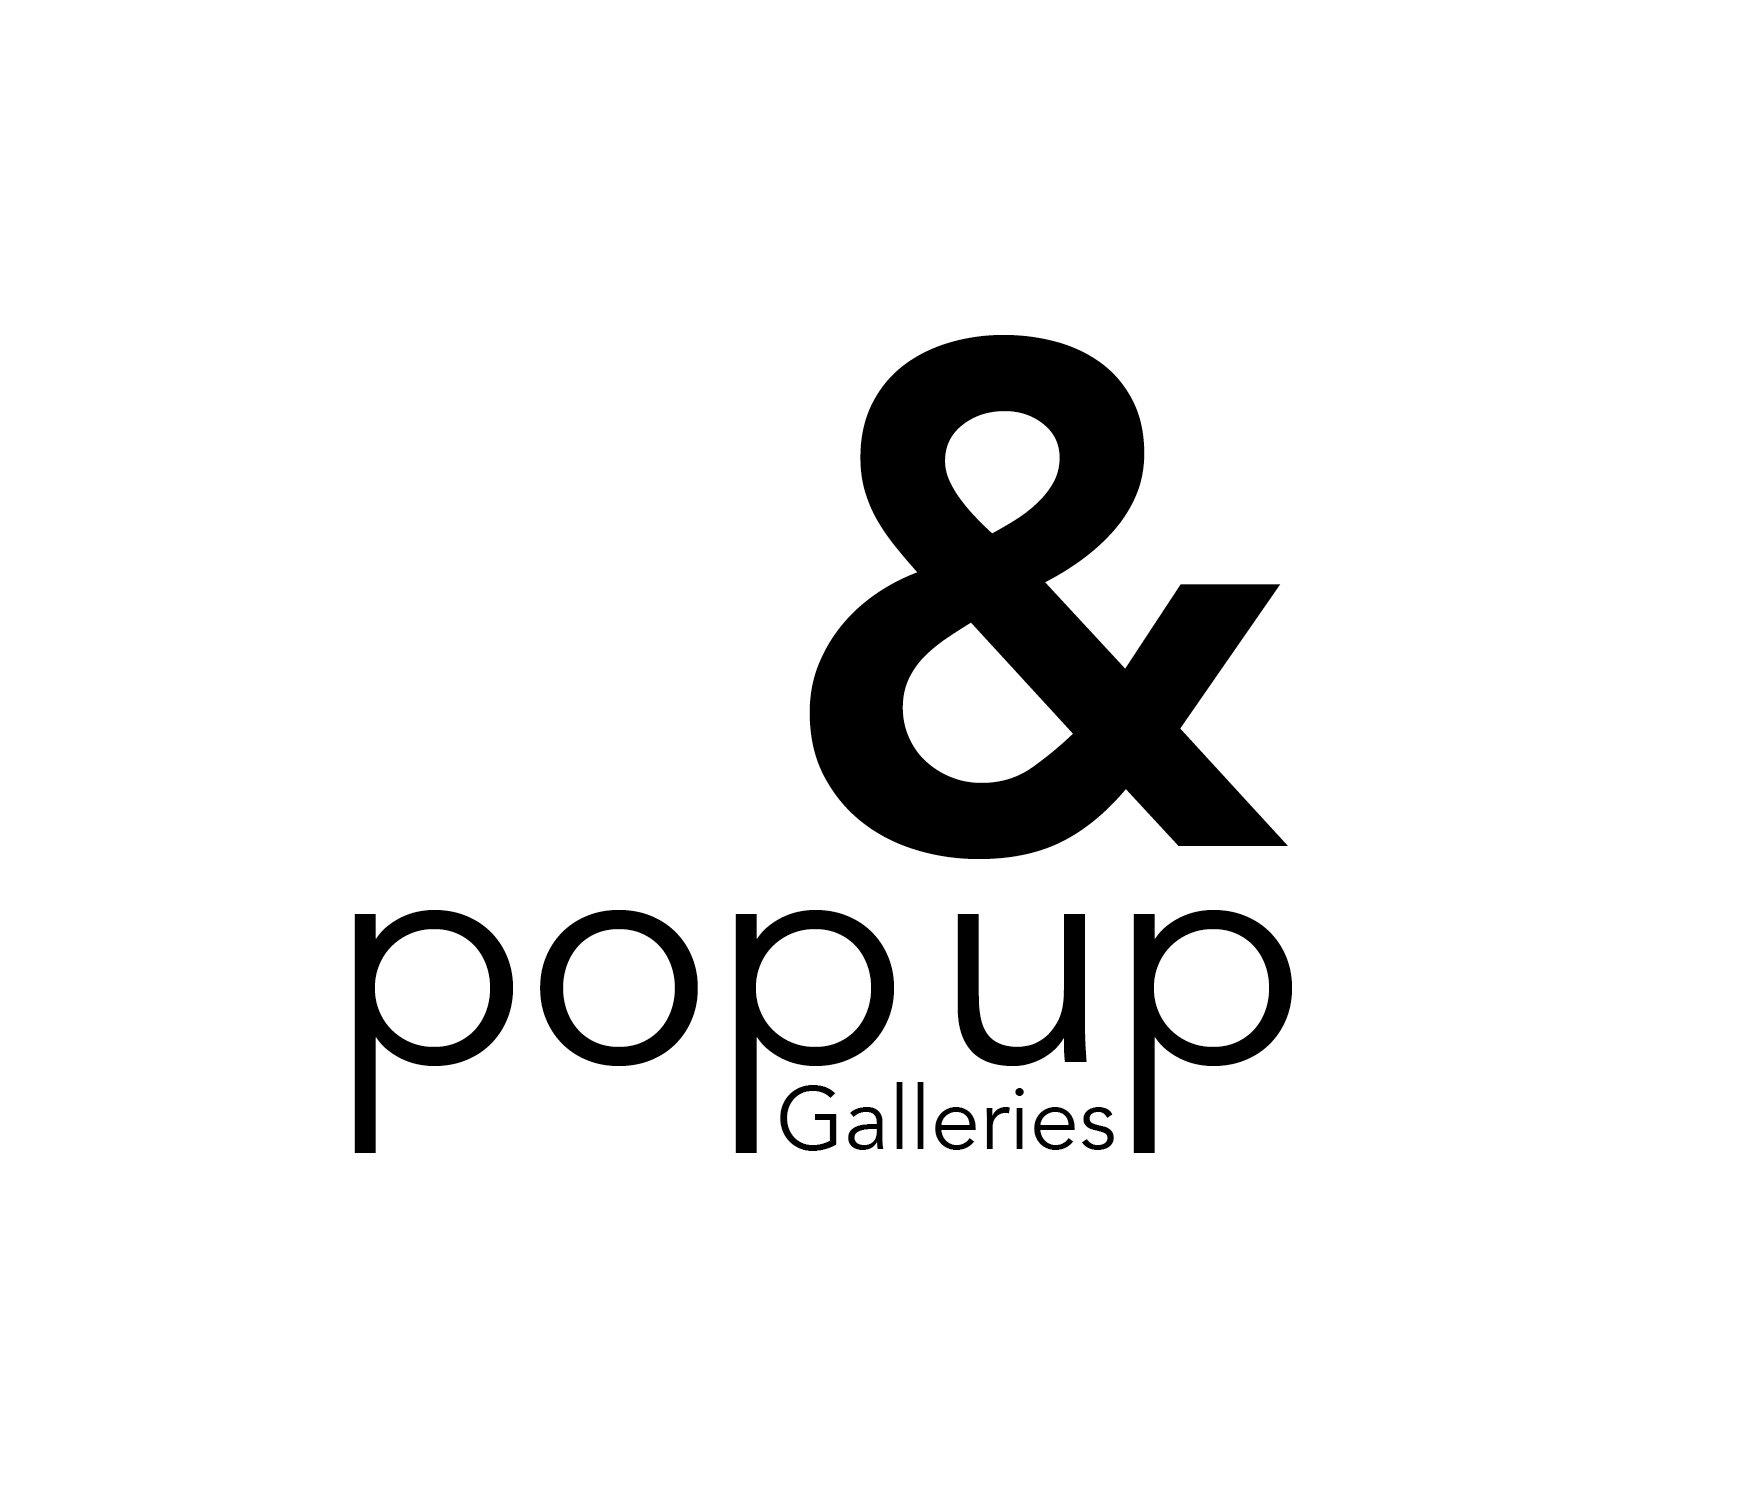 & pop Up fgalleries  logo.jpg